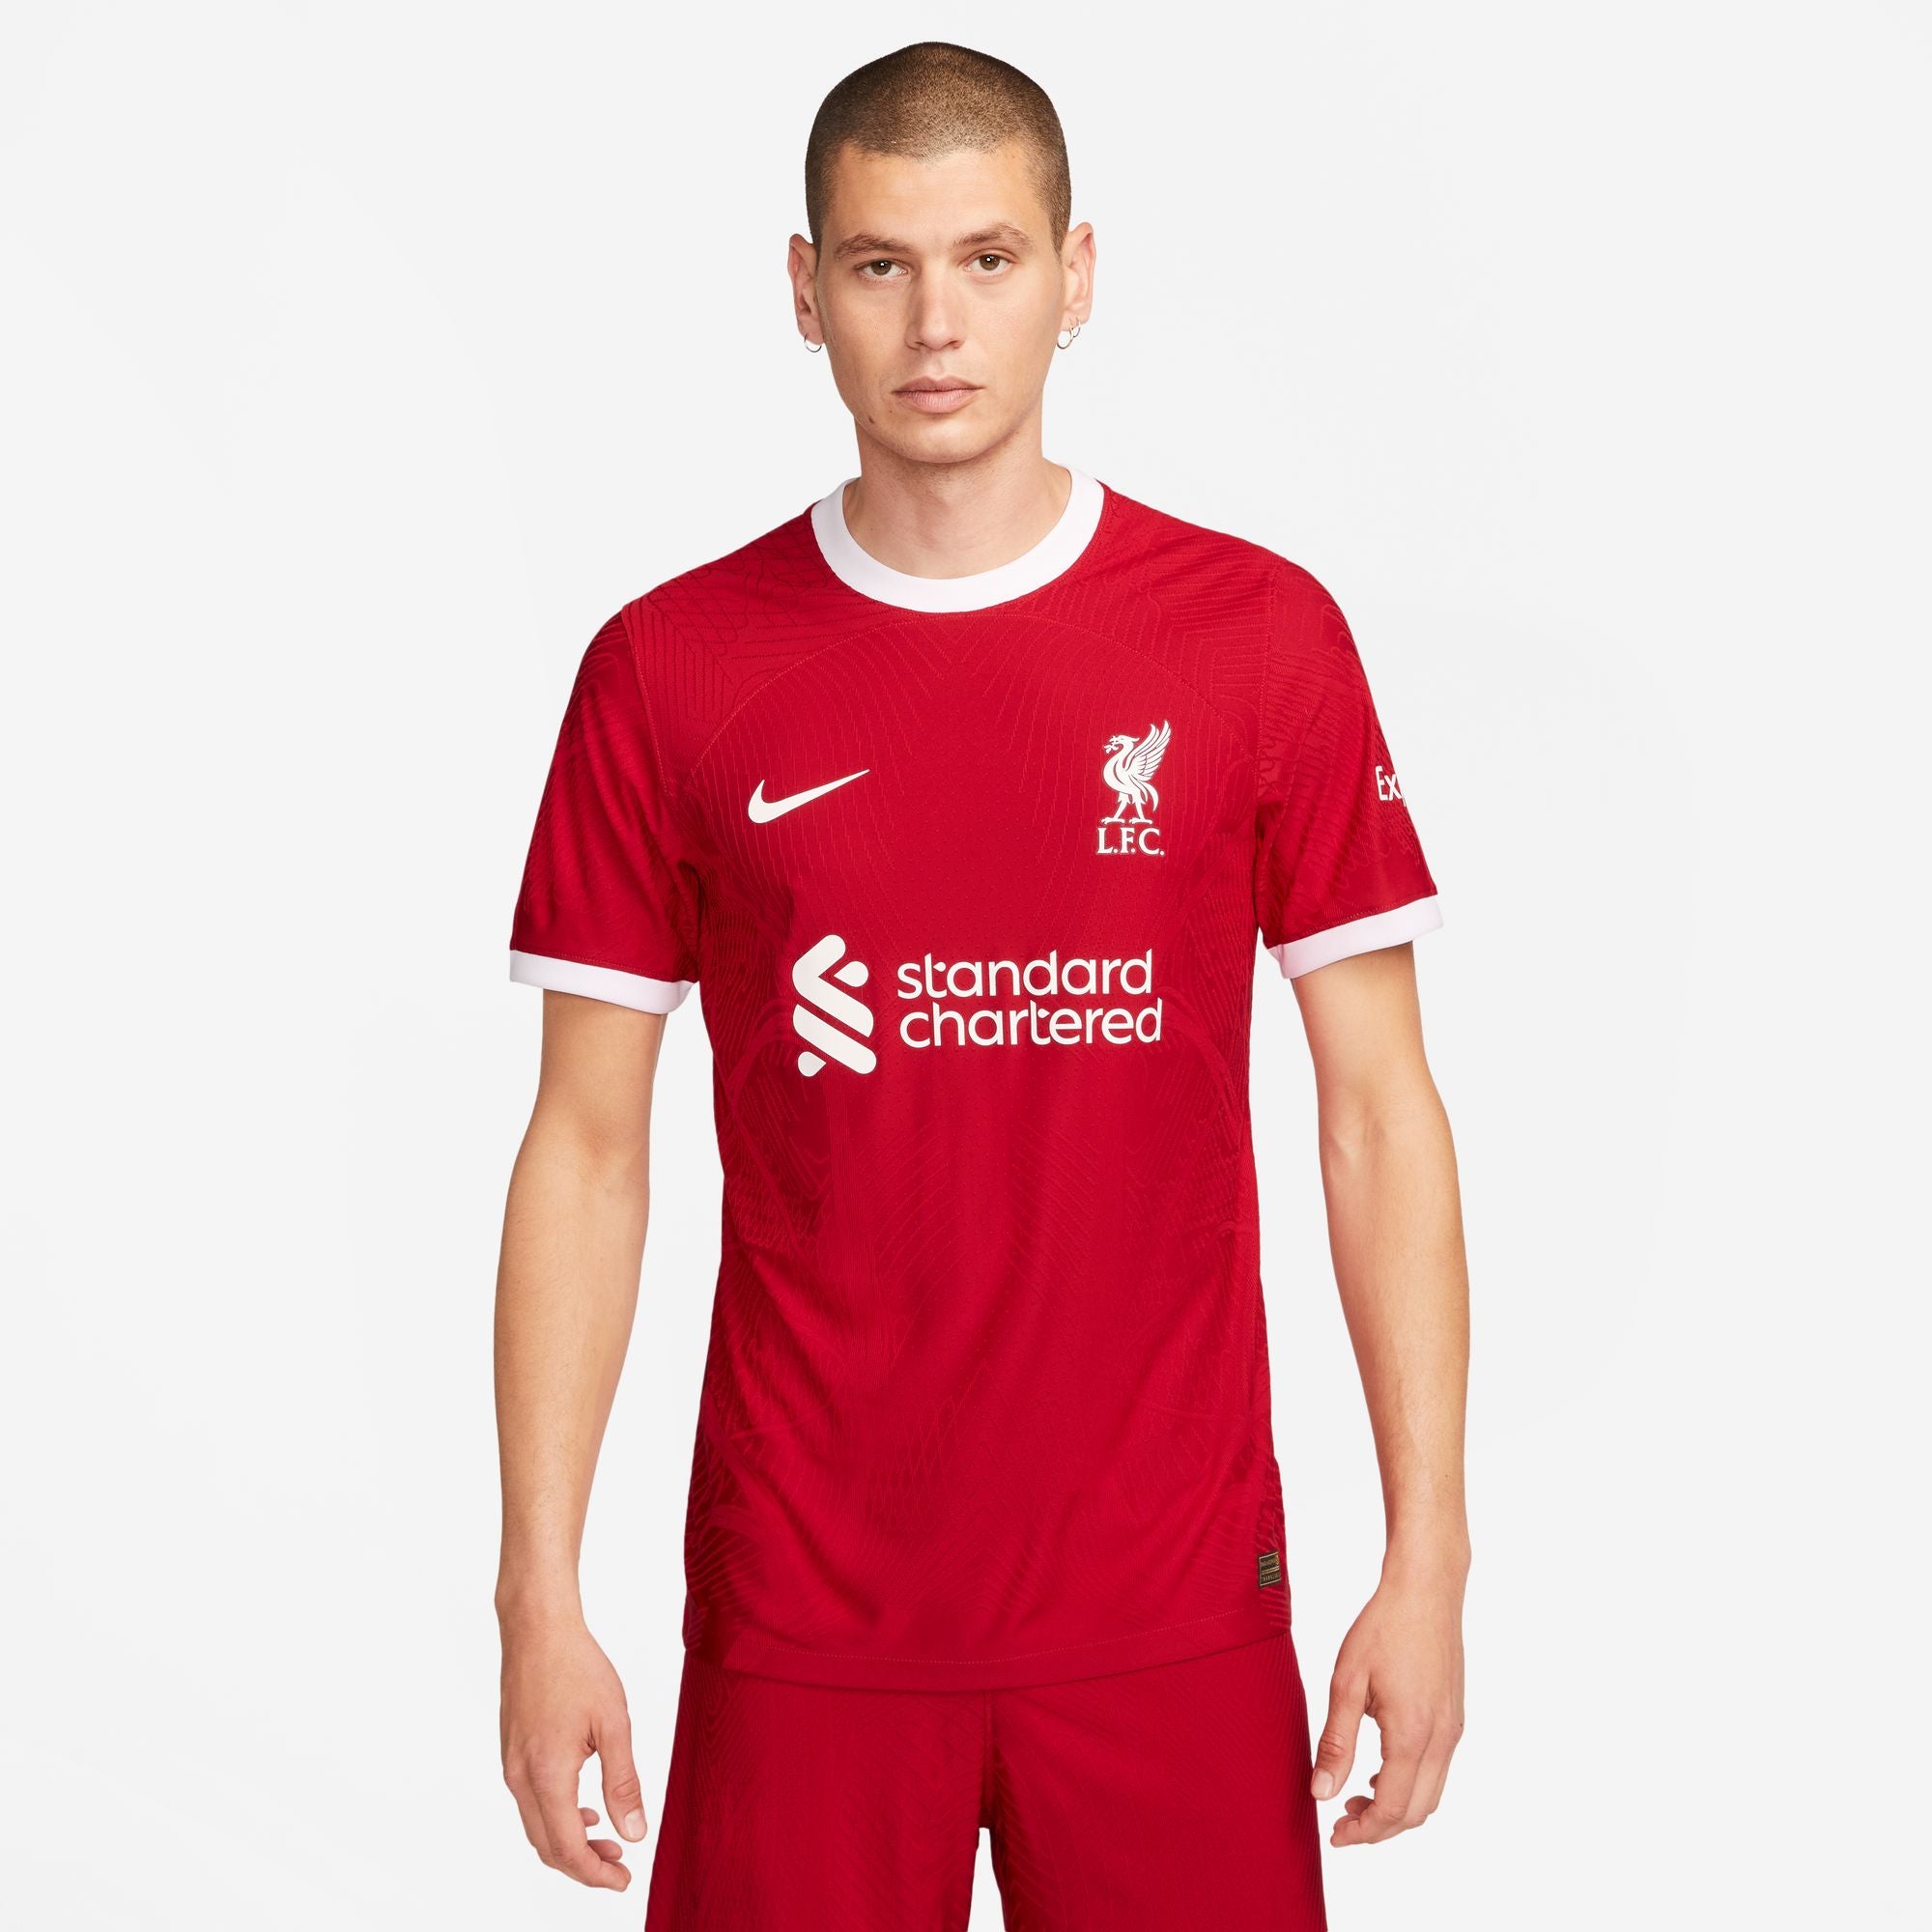 Liverpool FC Standard Issue Men's Nike Soccer Pants